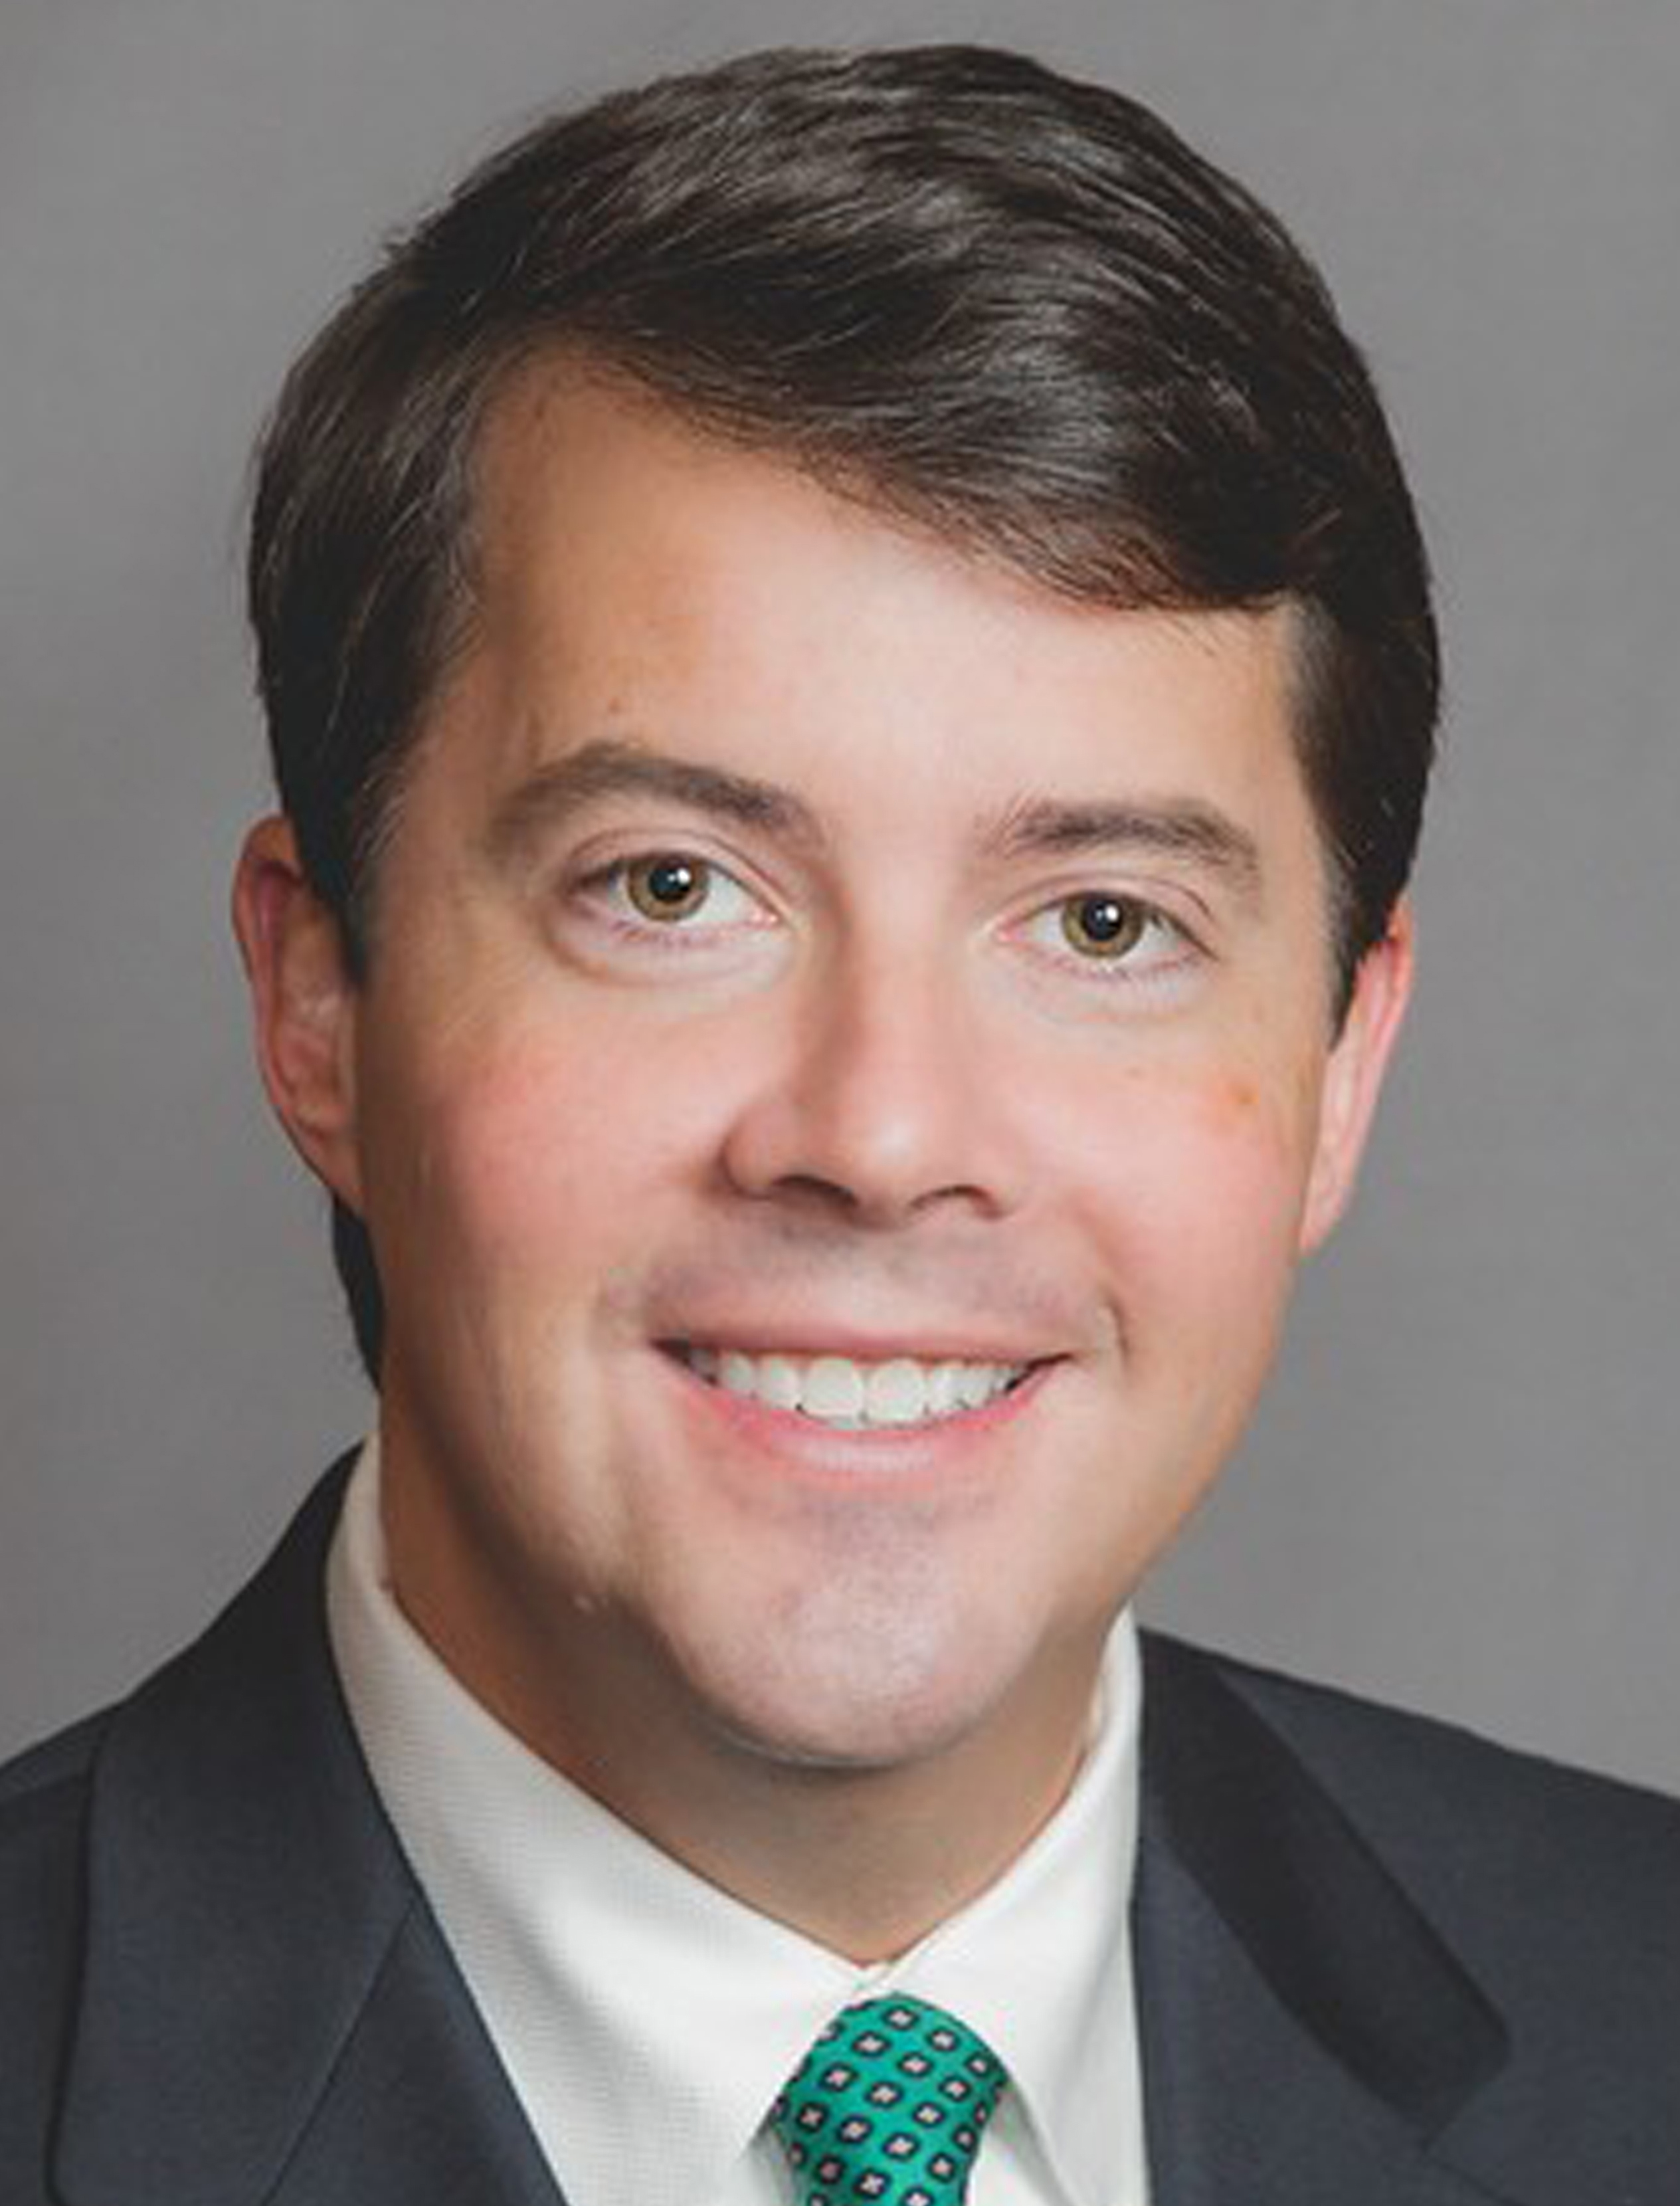  senator Matthew Gambill